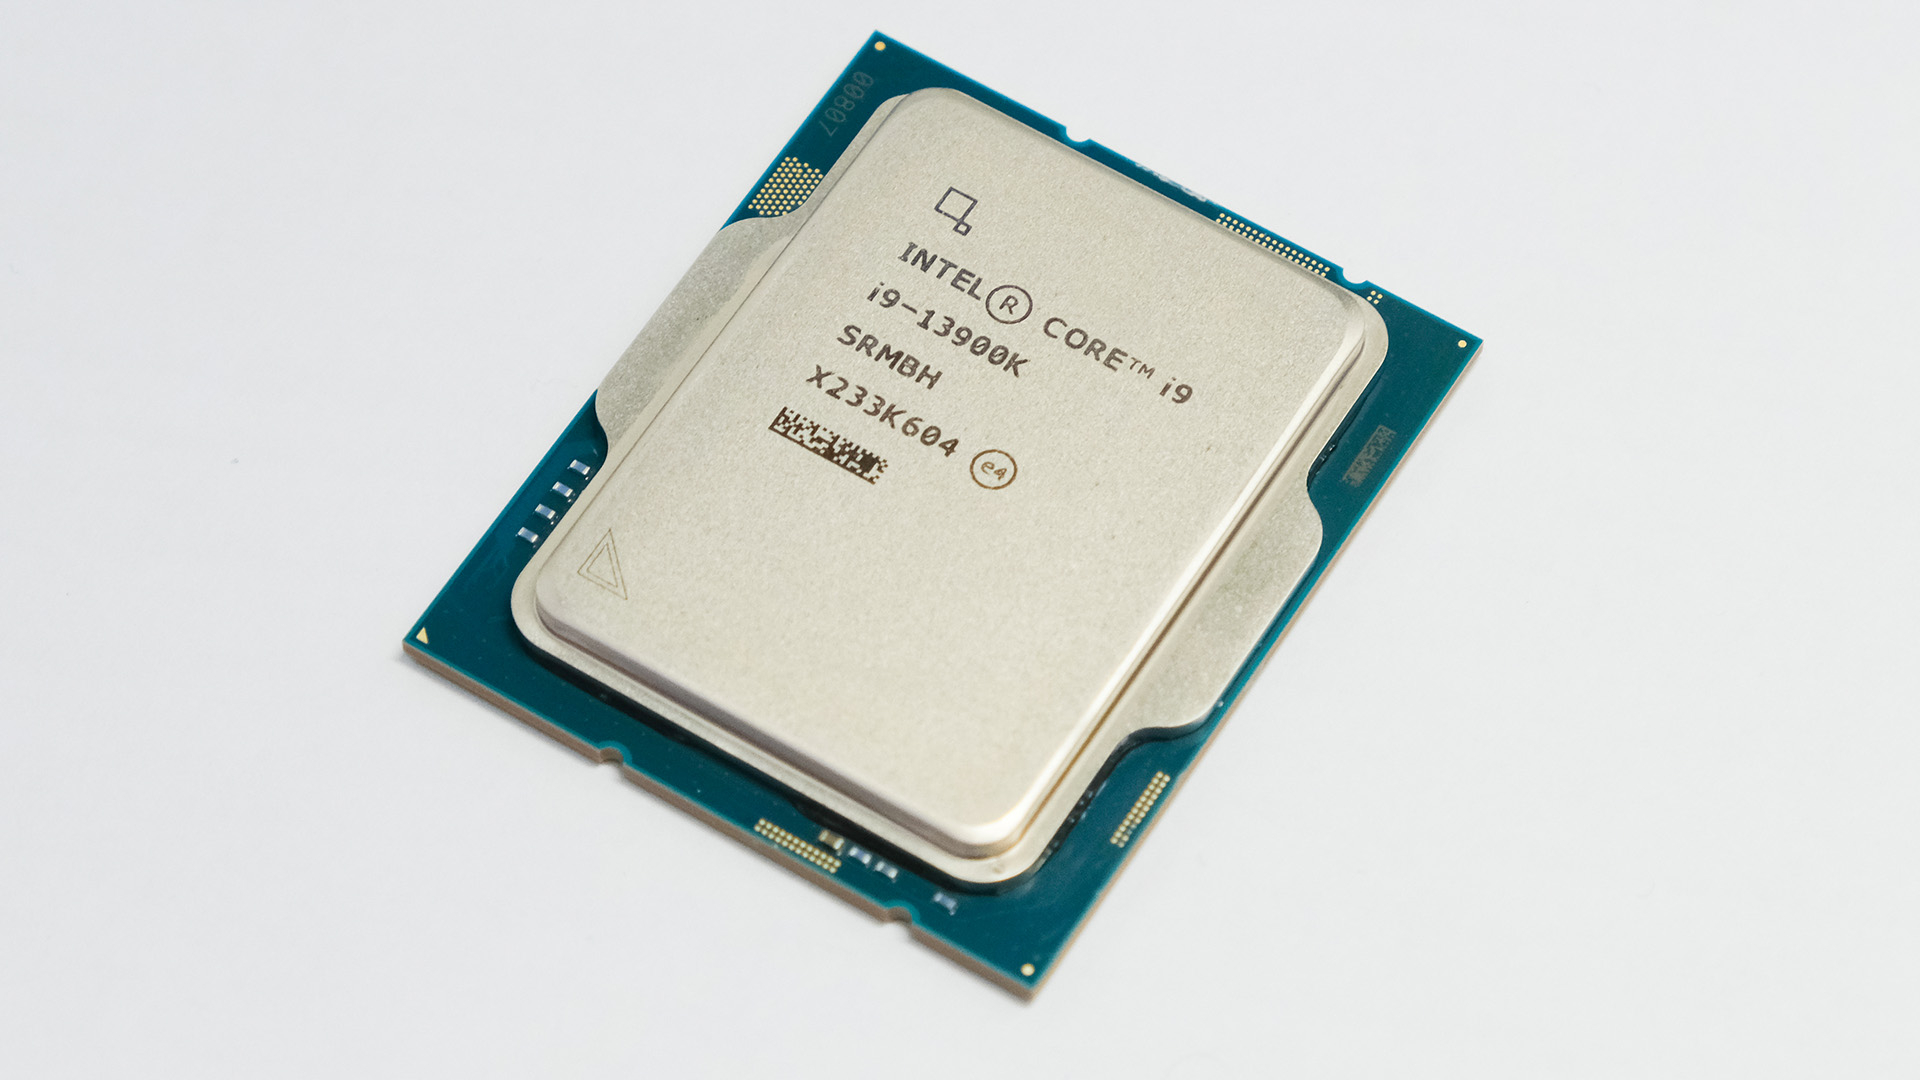 IntelIntel Core i9 13900K